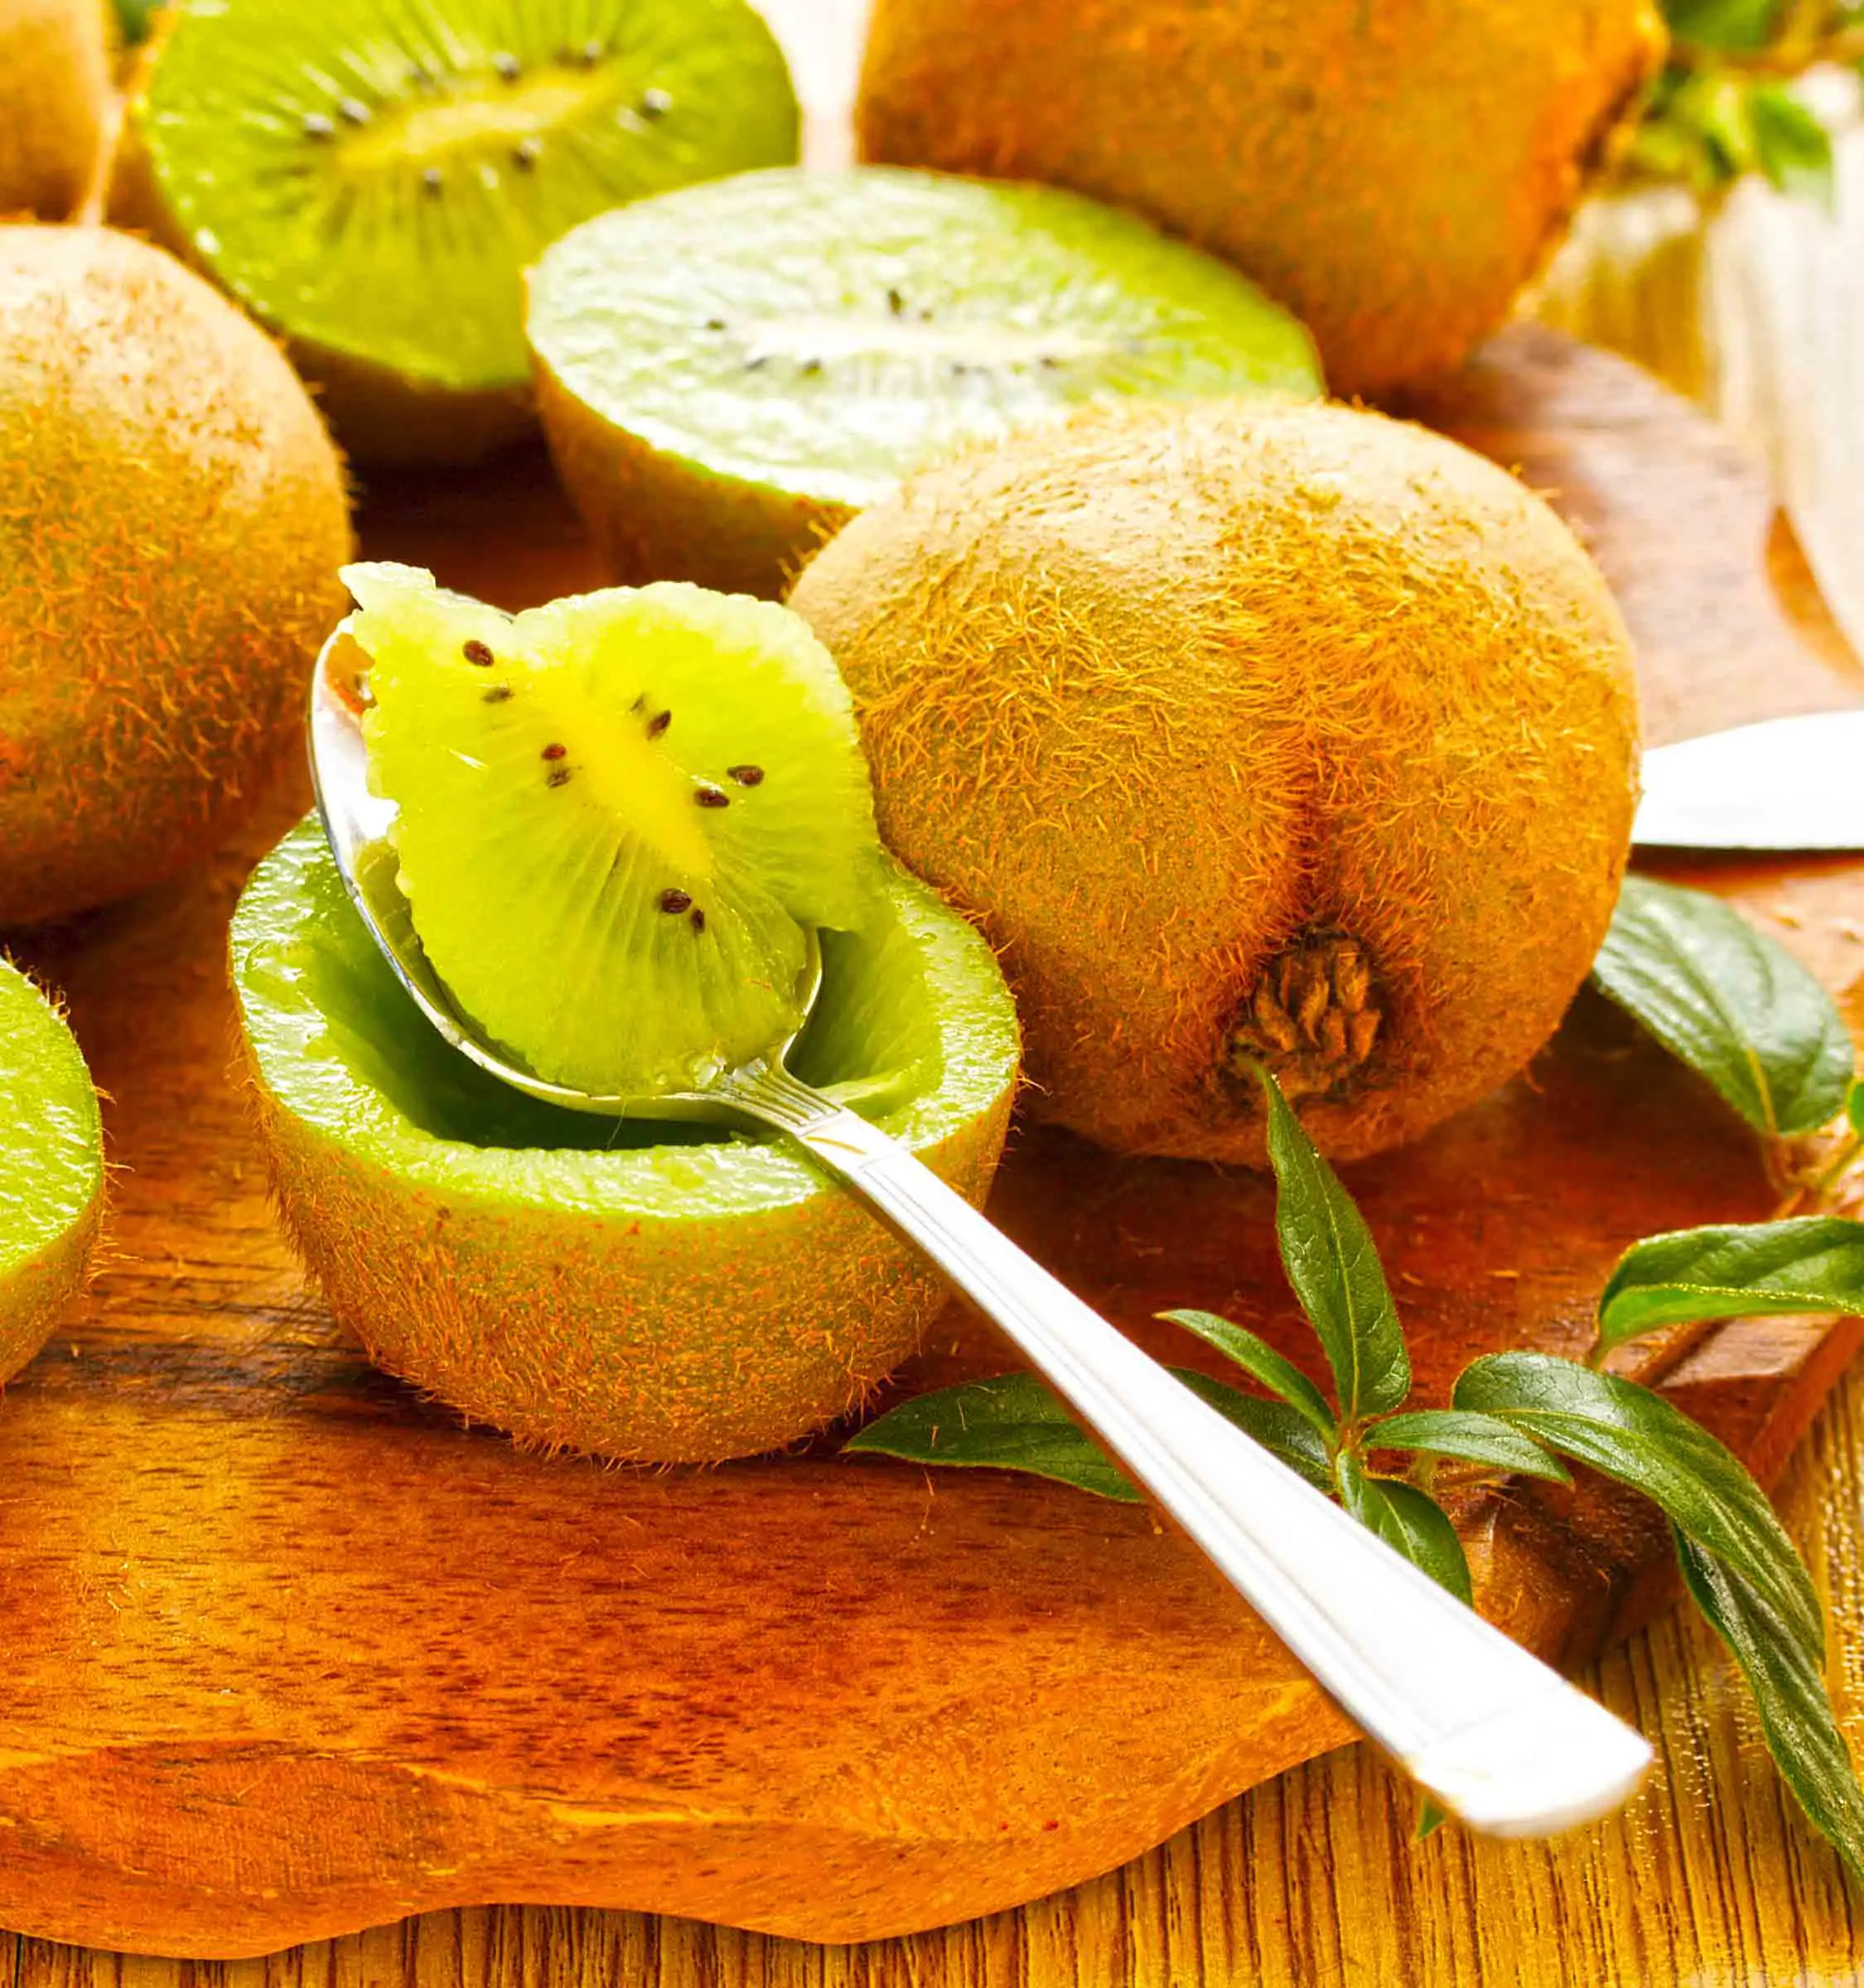 Kiwifruit extract benefits, effects, and uses. 1